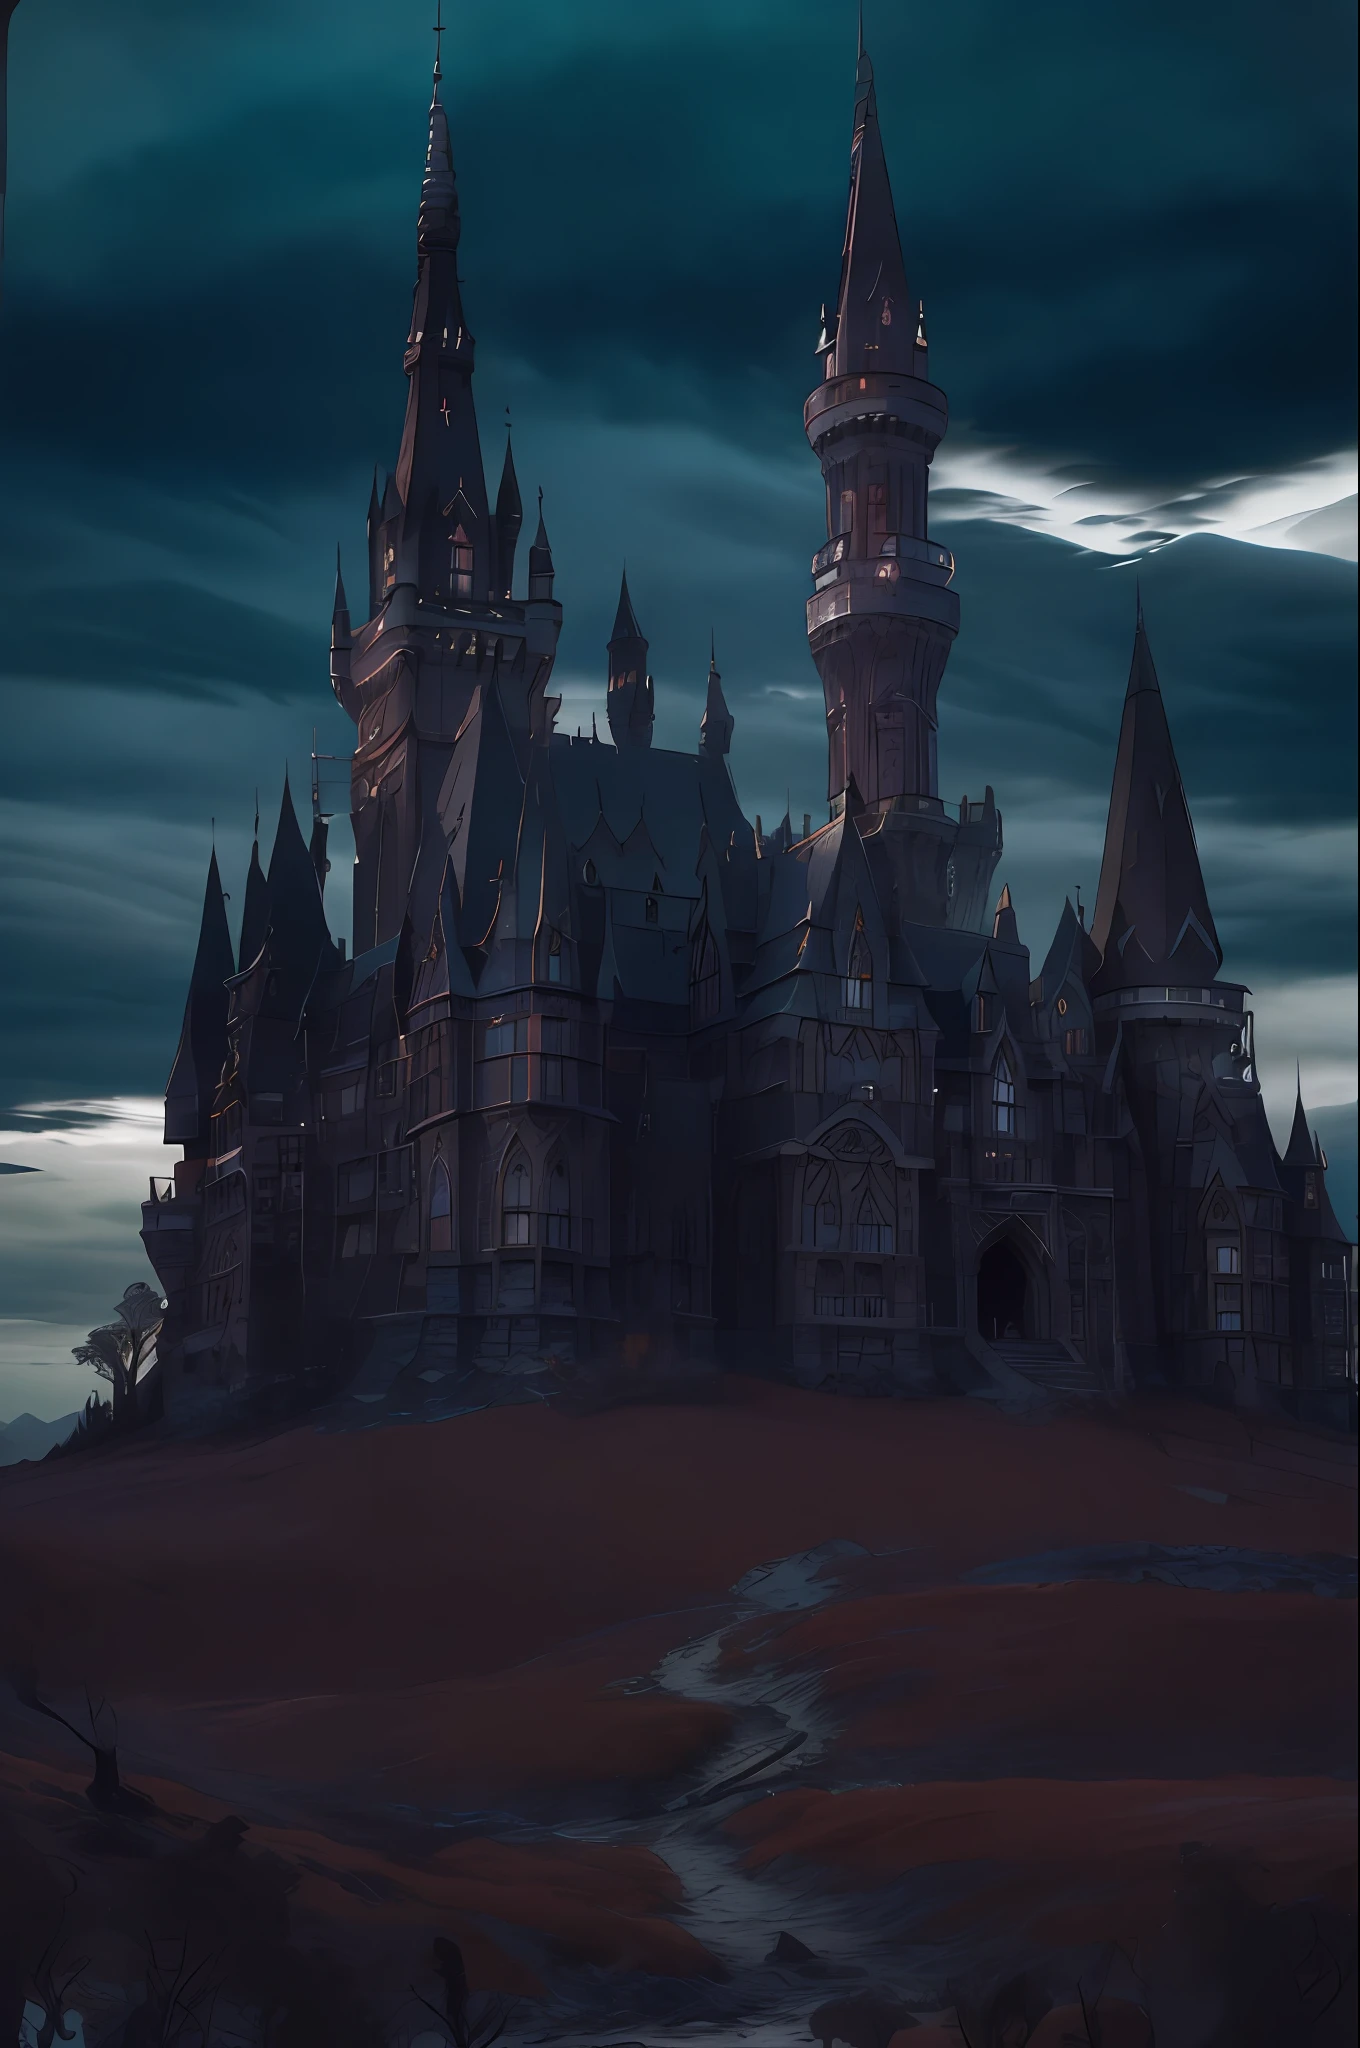 gothic castle, stylized, (architecture), landscape, (haunted, desolate, night, dark), stormy night, dark hour, epic, cinematic